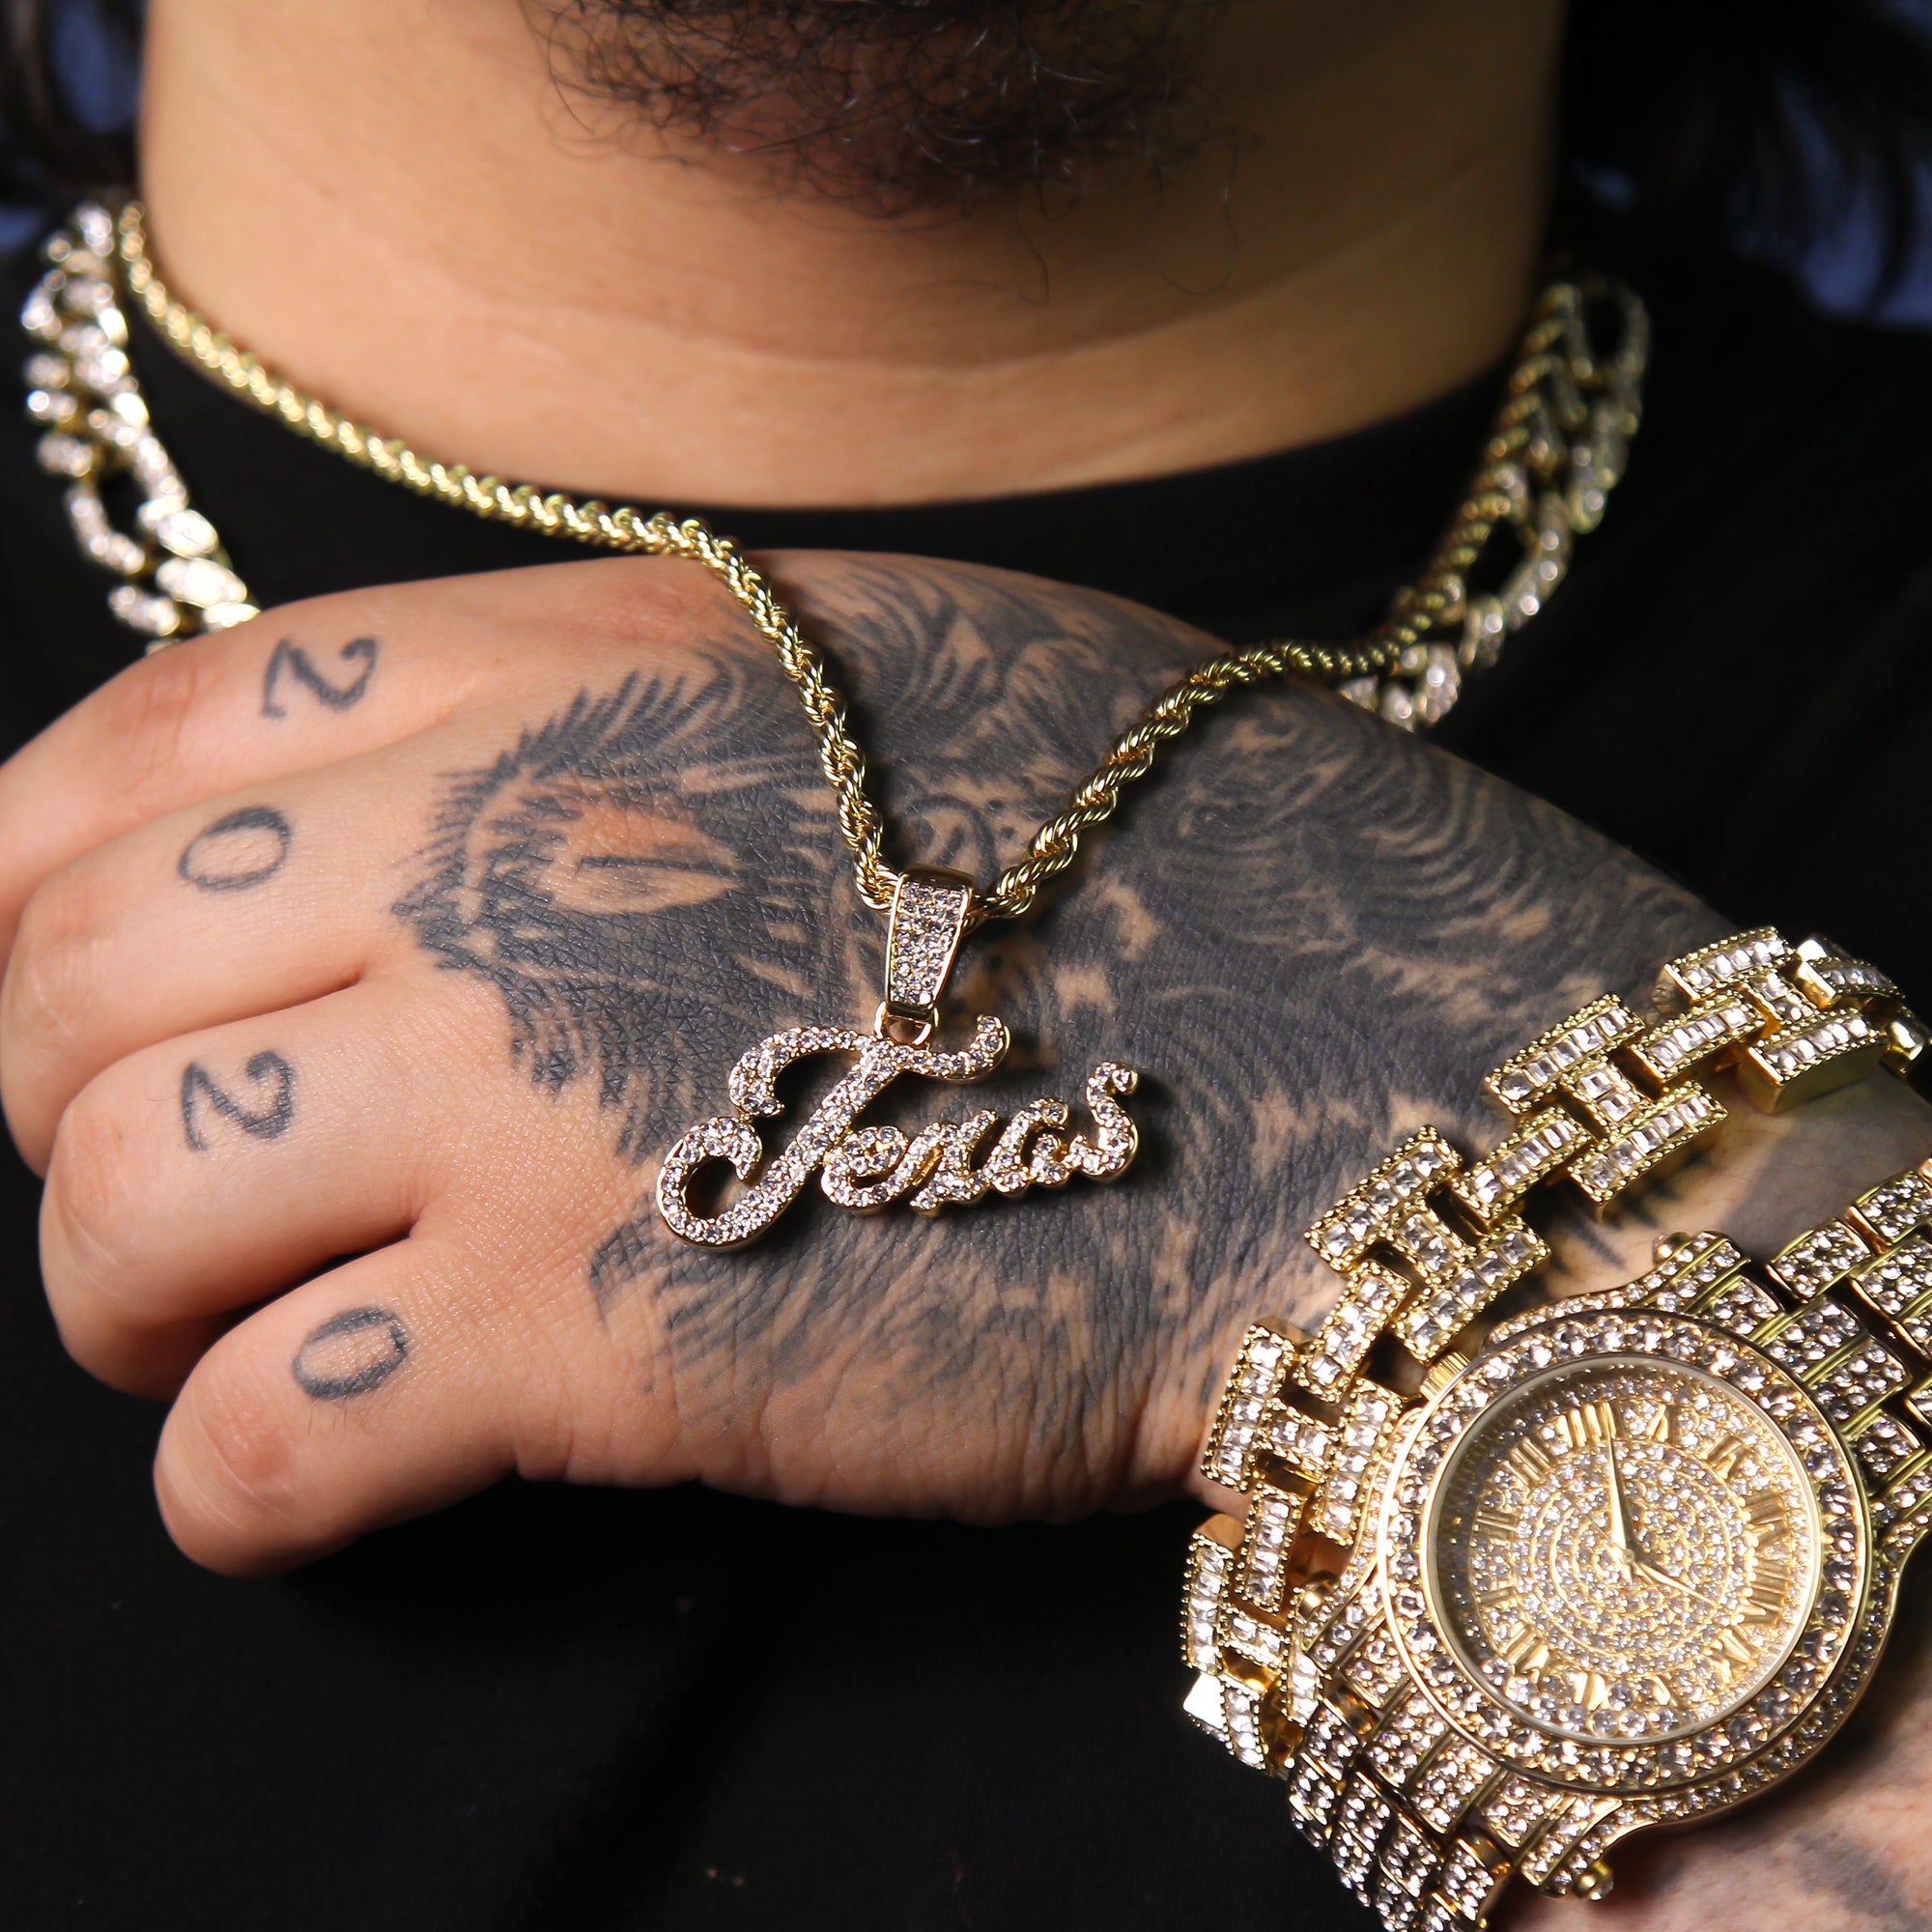 Cz Texas Pendant Rope Chain Men's Hip Hop 18k Cz Jewelry Necklace Choker